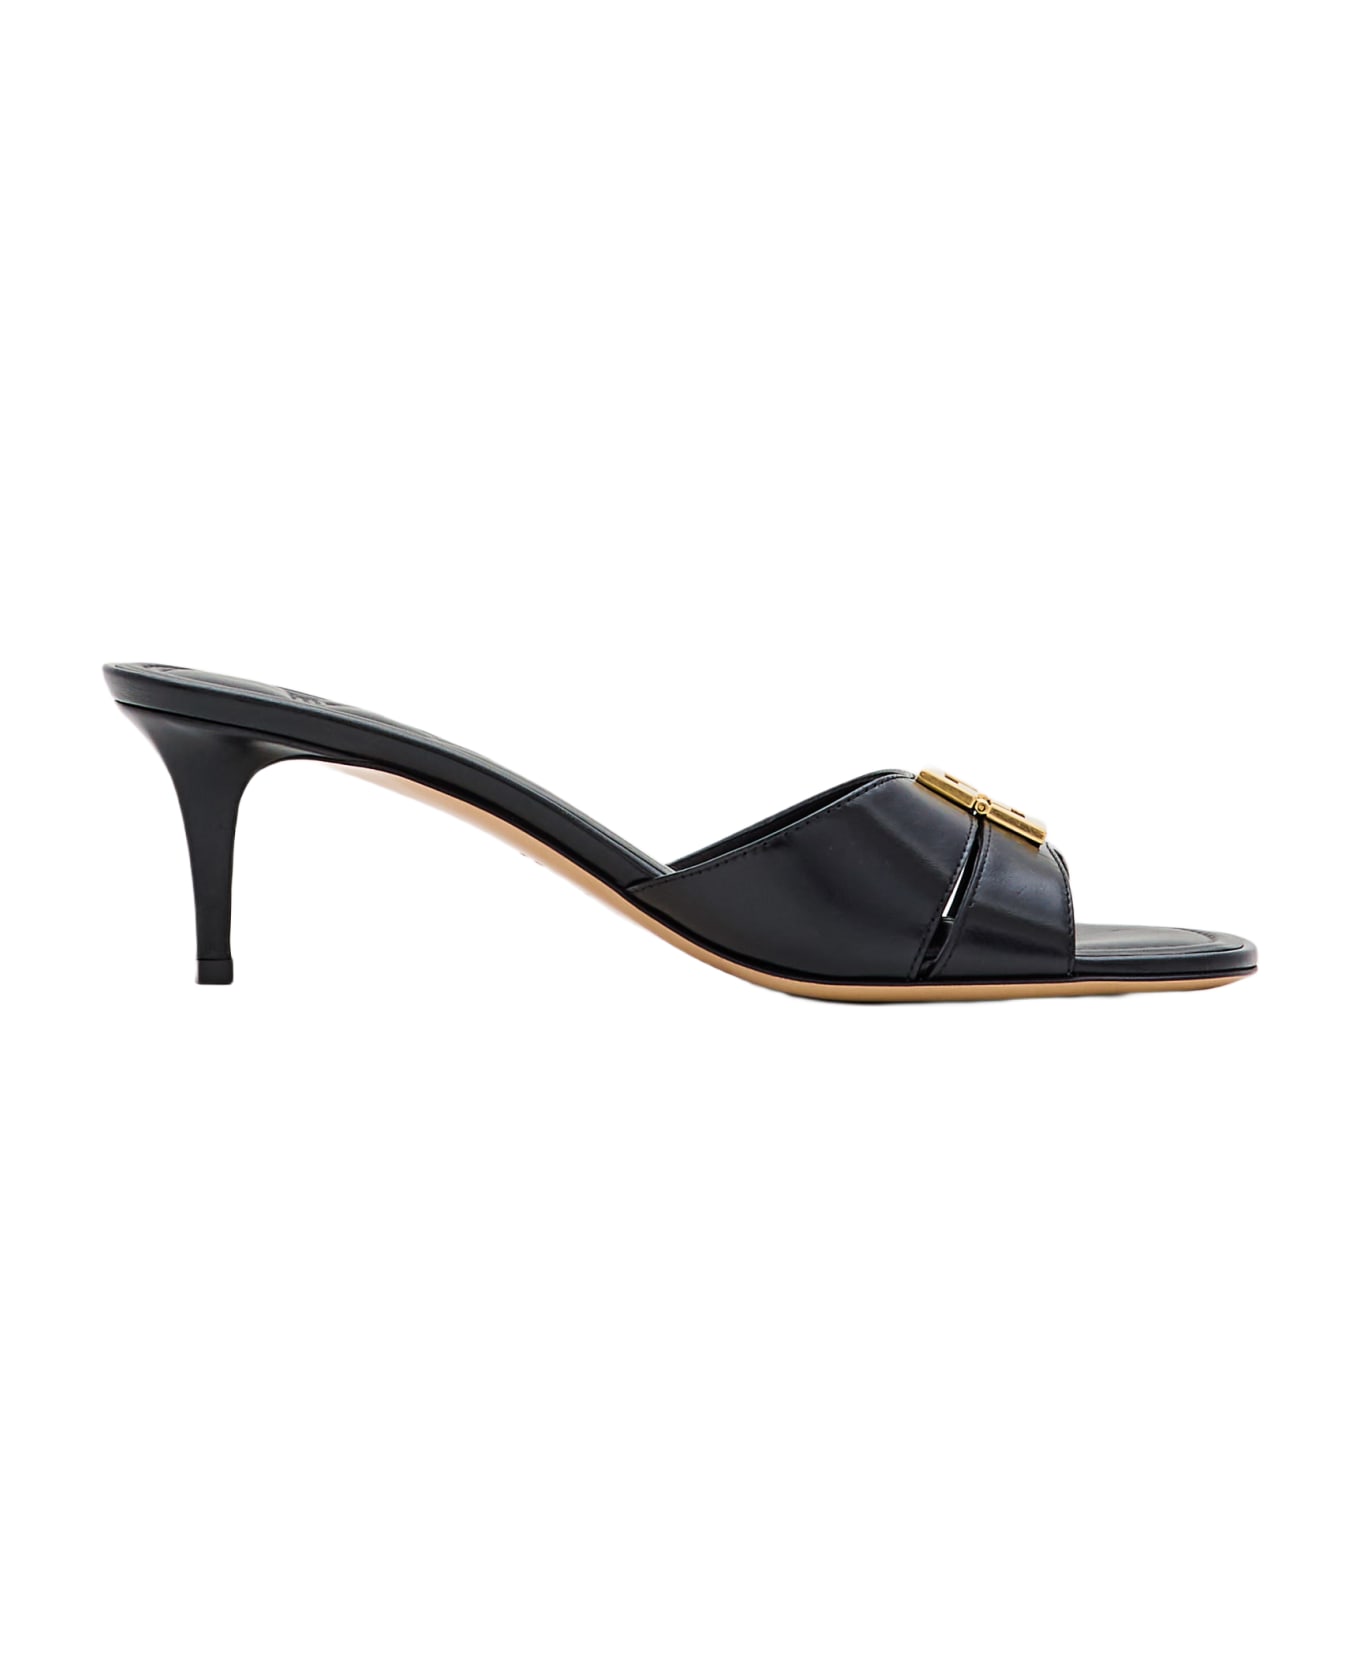 Fendi Slide Patent Leather Heels - Black サンダル